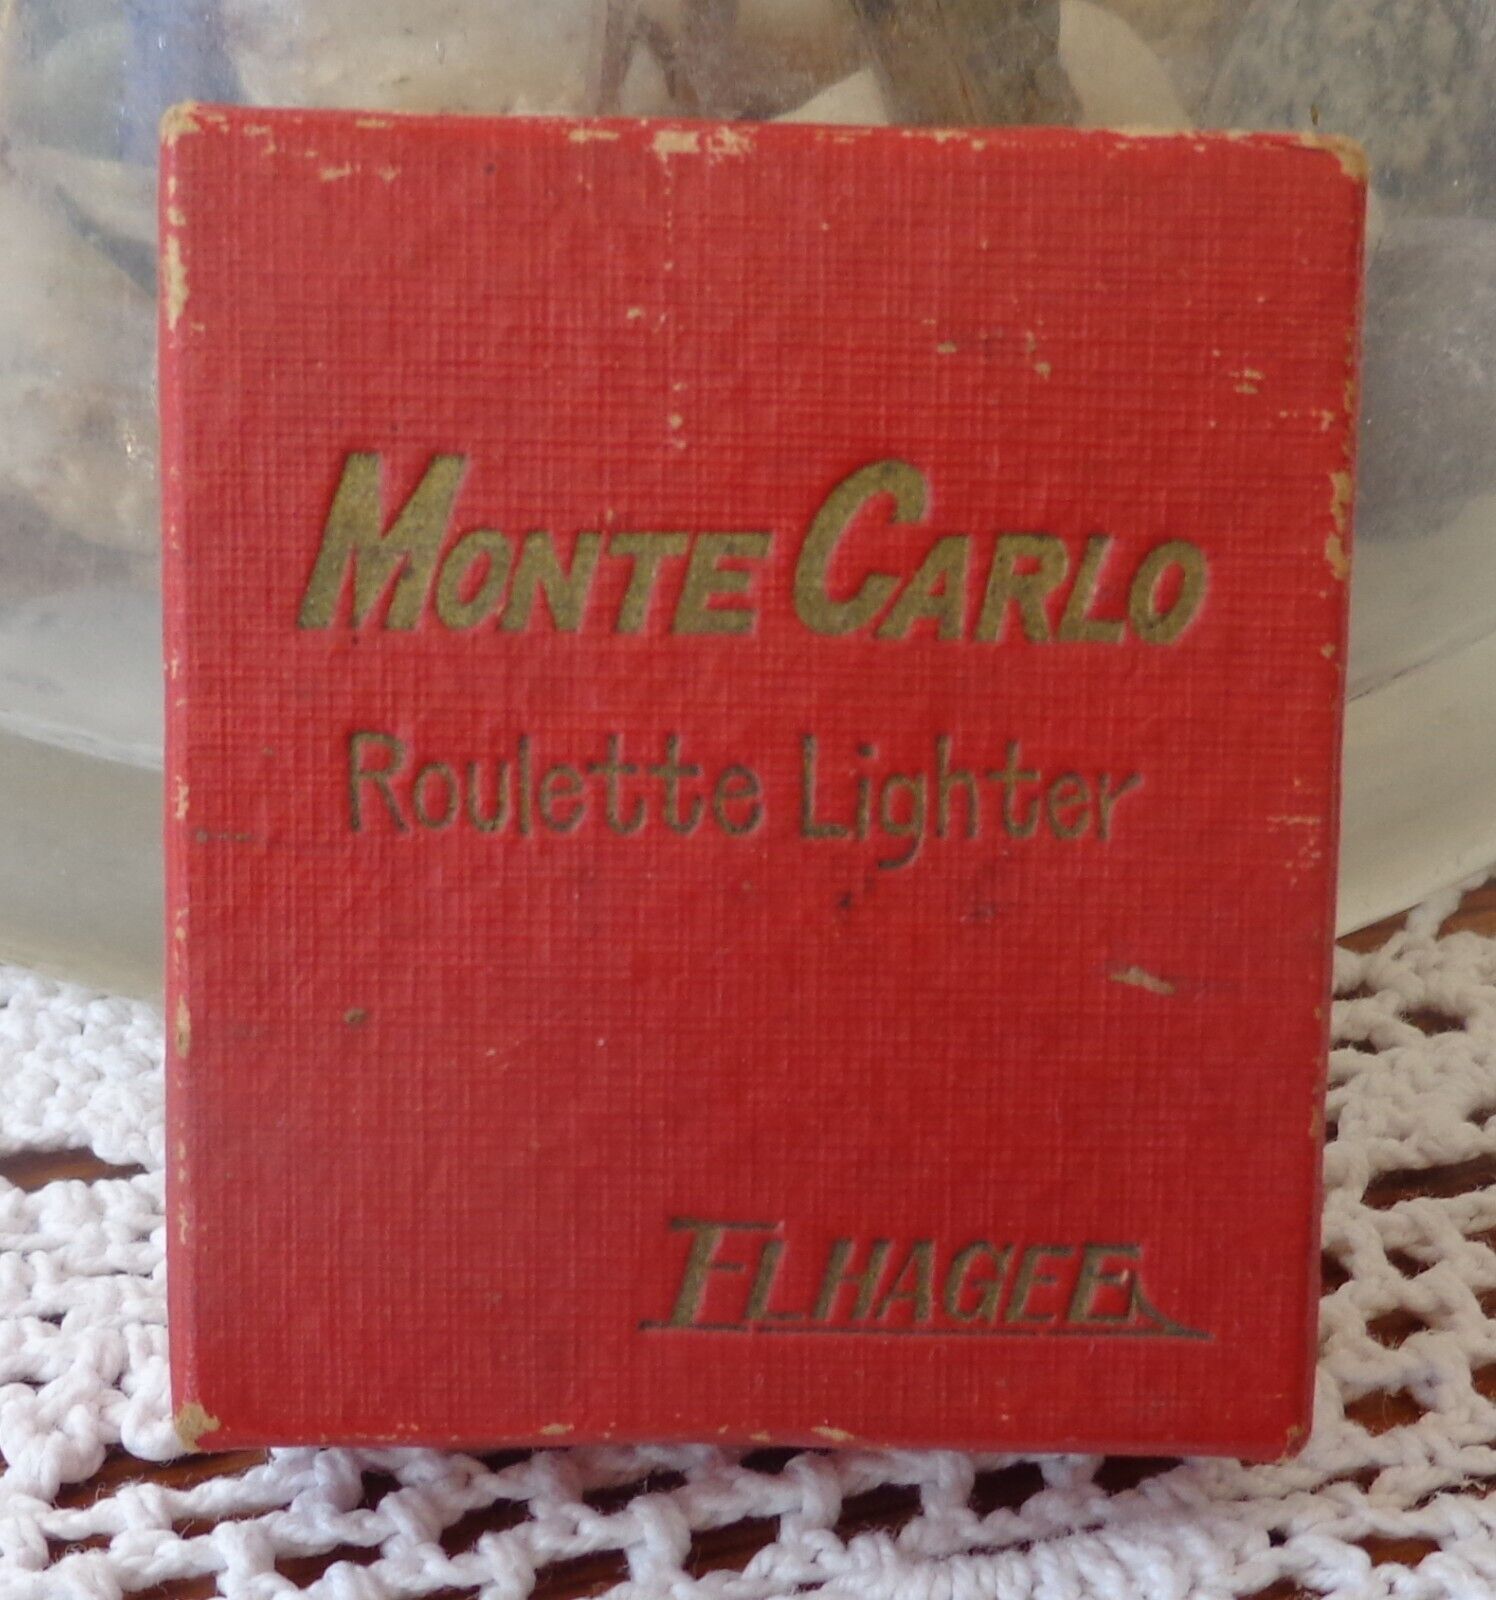 DEALER-RITA Antique Monte Carlo roulette lighter El Hagee Holland 1002